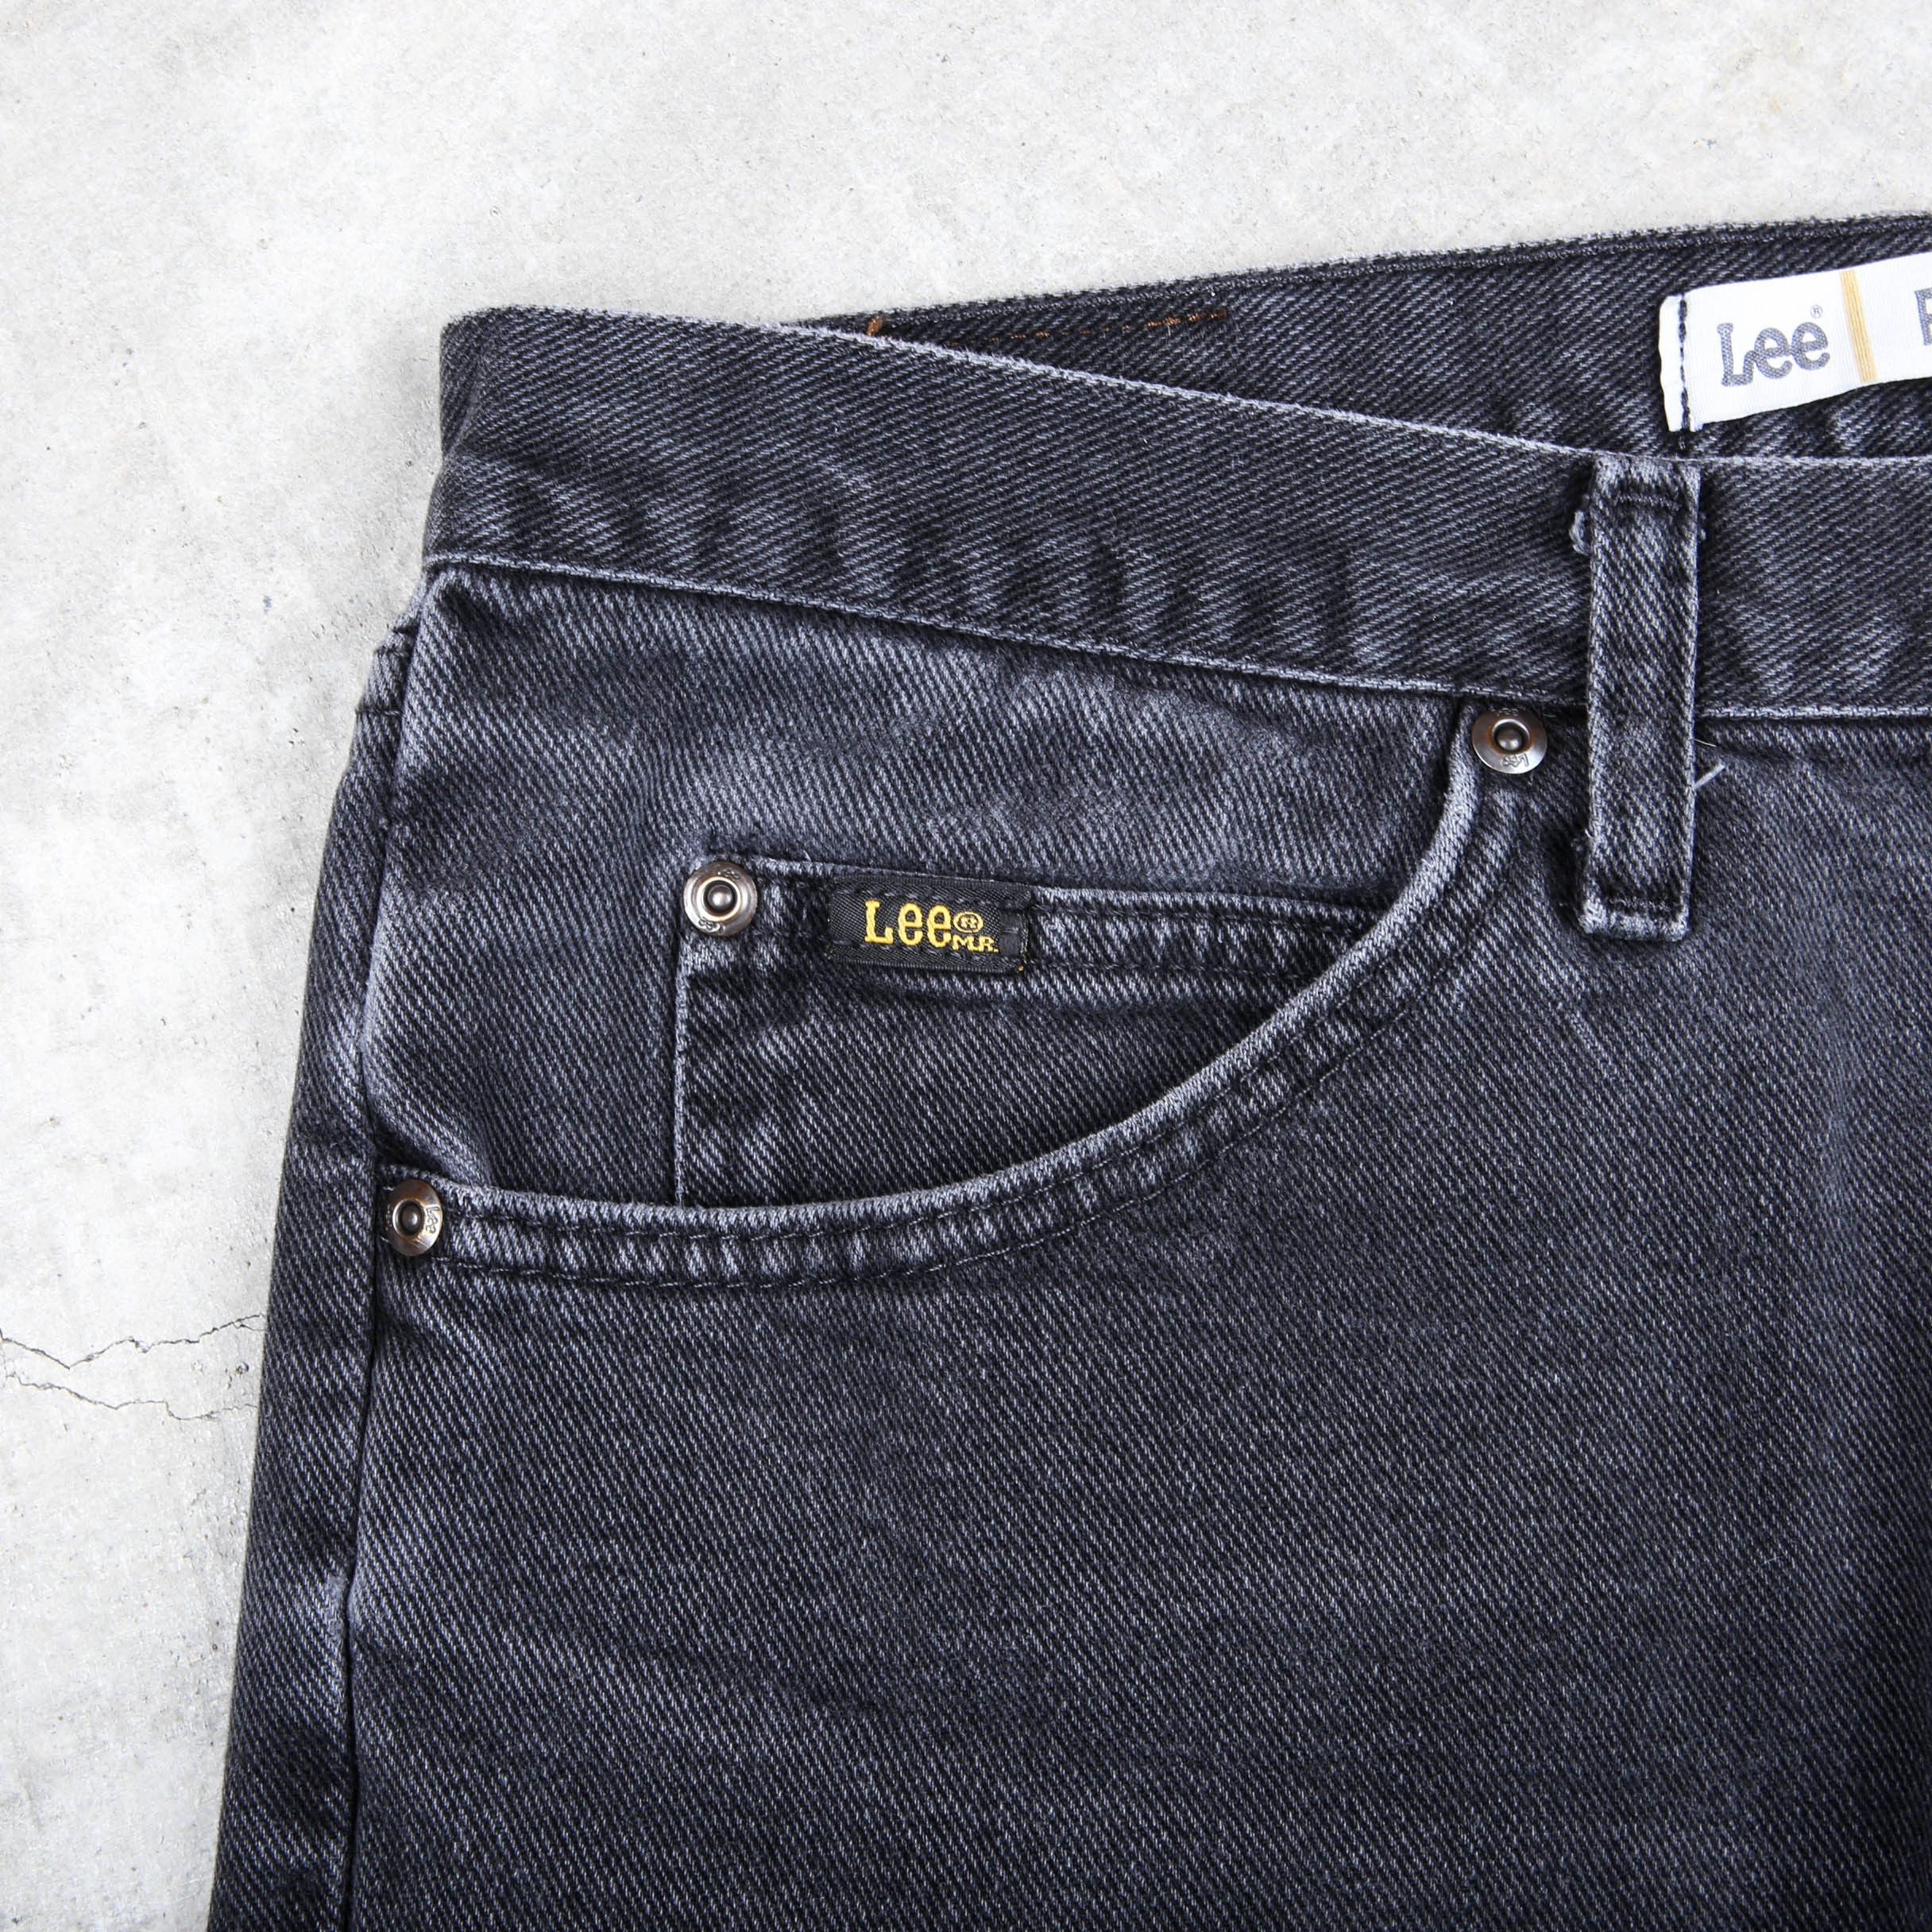 Vintage Vintage Lee's Denim Faded Jeans 33 Late 90s Size US 33 - 5 Thumbnail